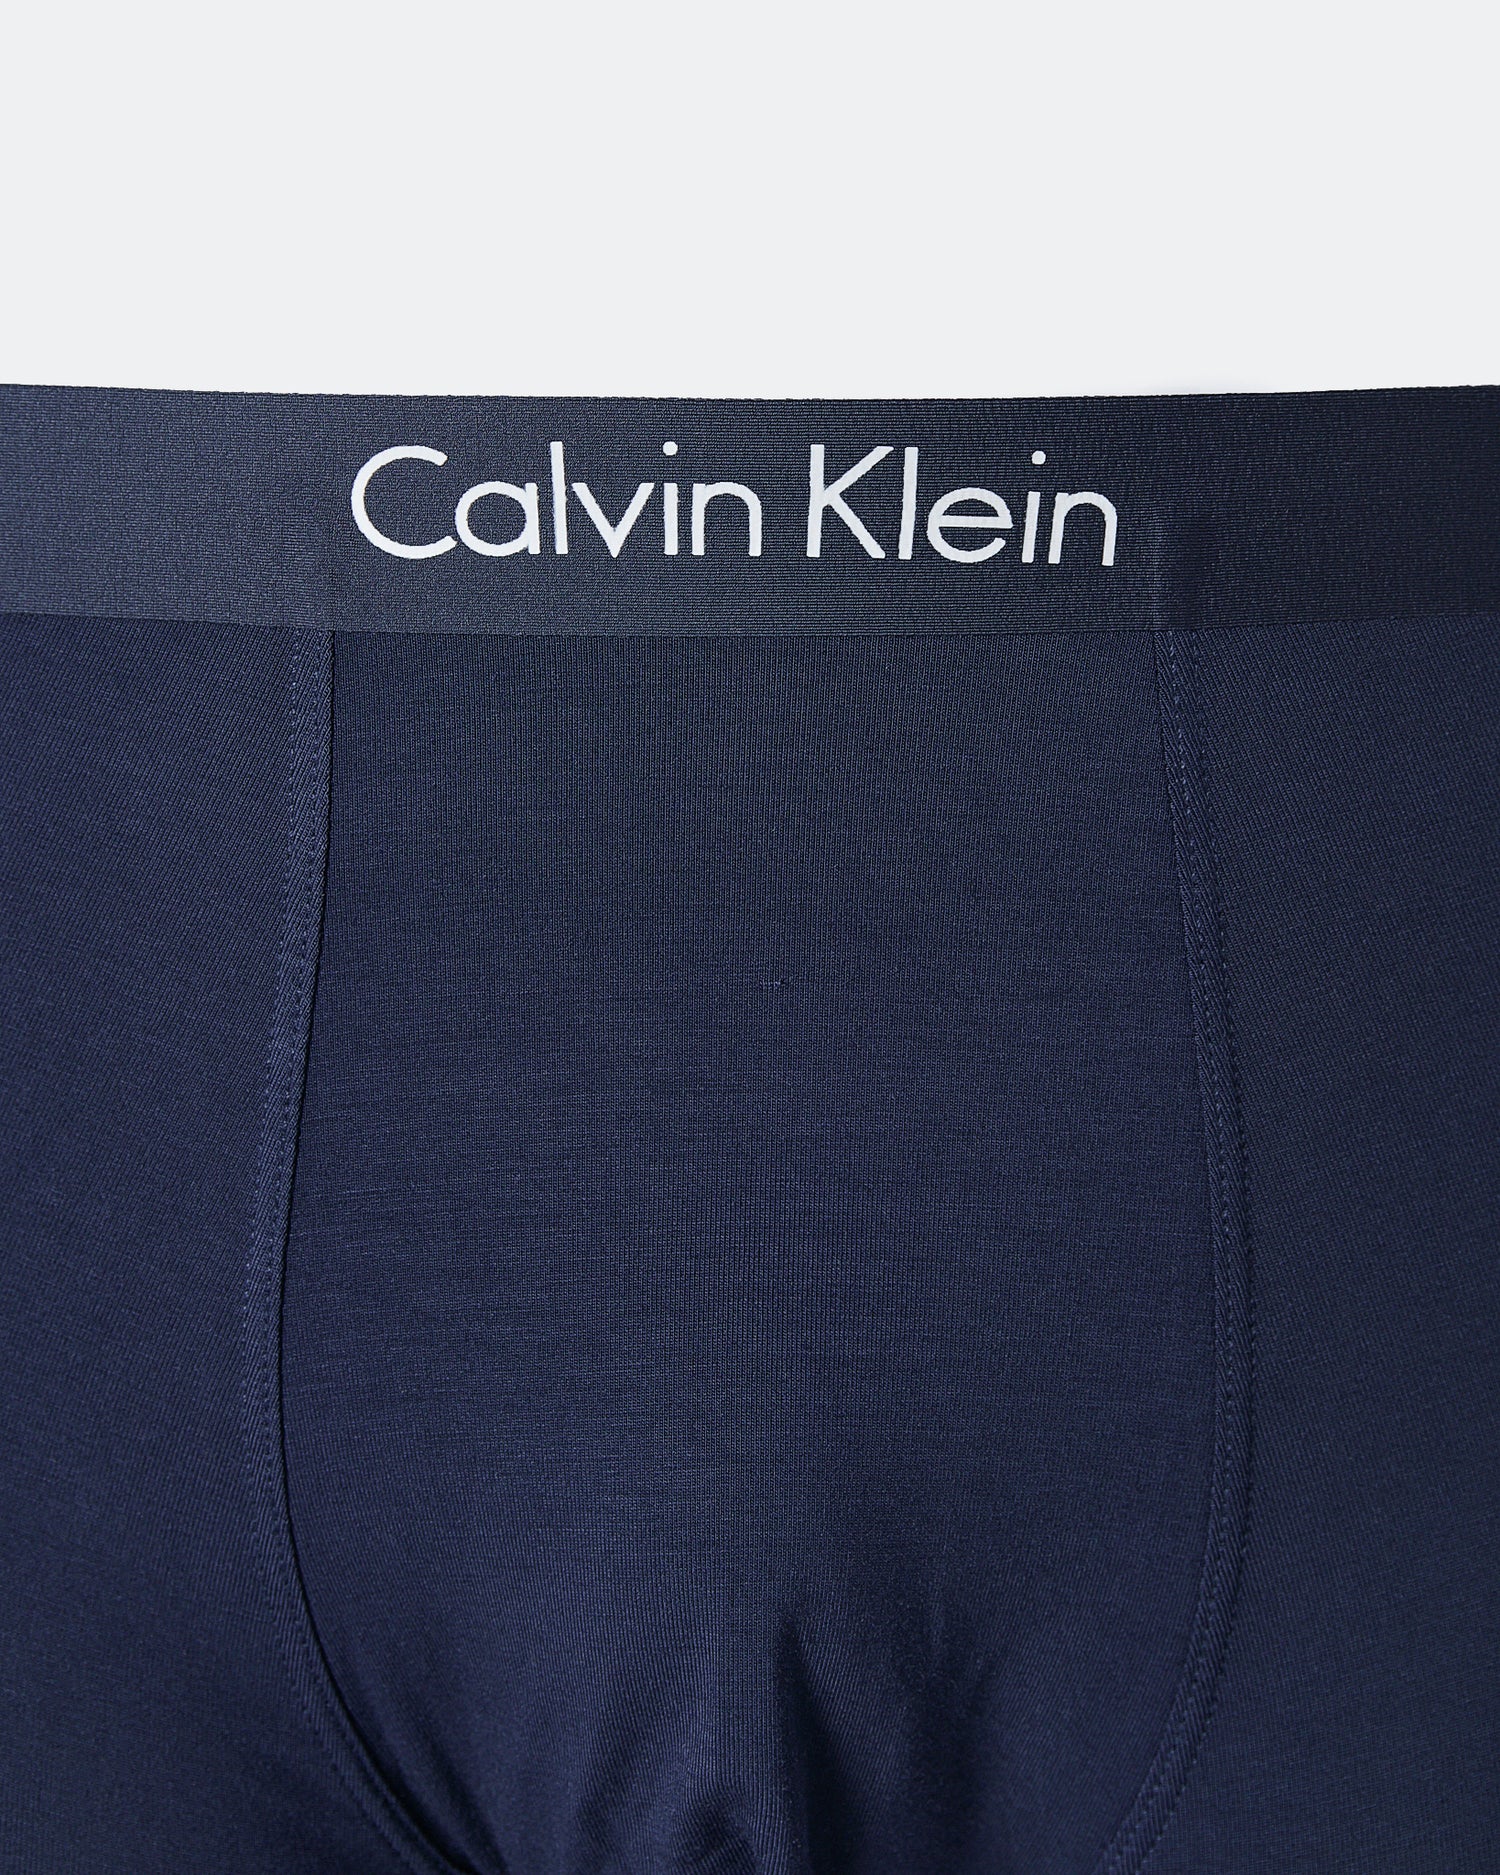 CK Light Weight Men Blue Underwear 6.90